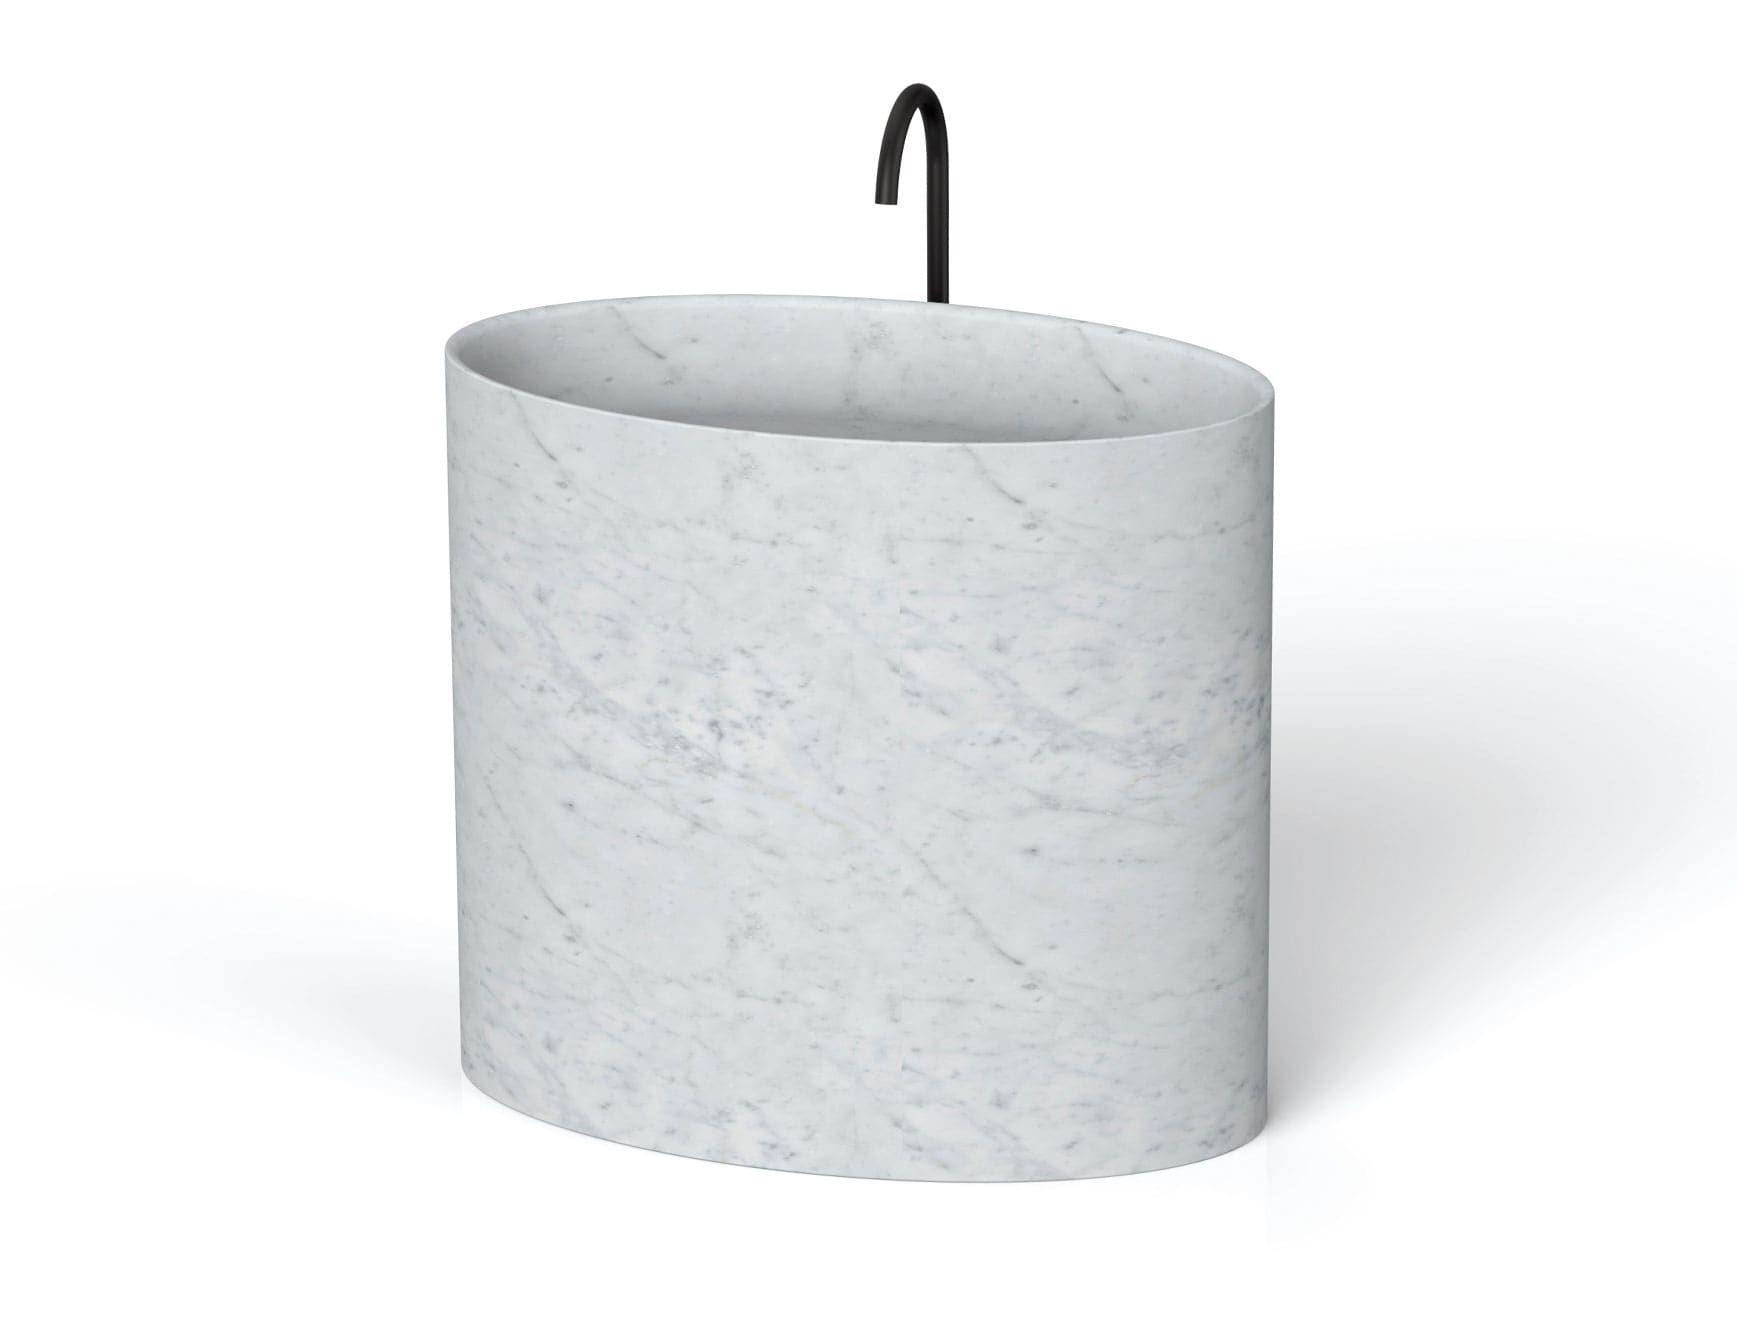 Entity Ovale contemporary Italian basin sink with white Carrara marble